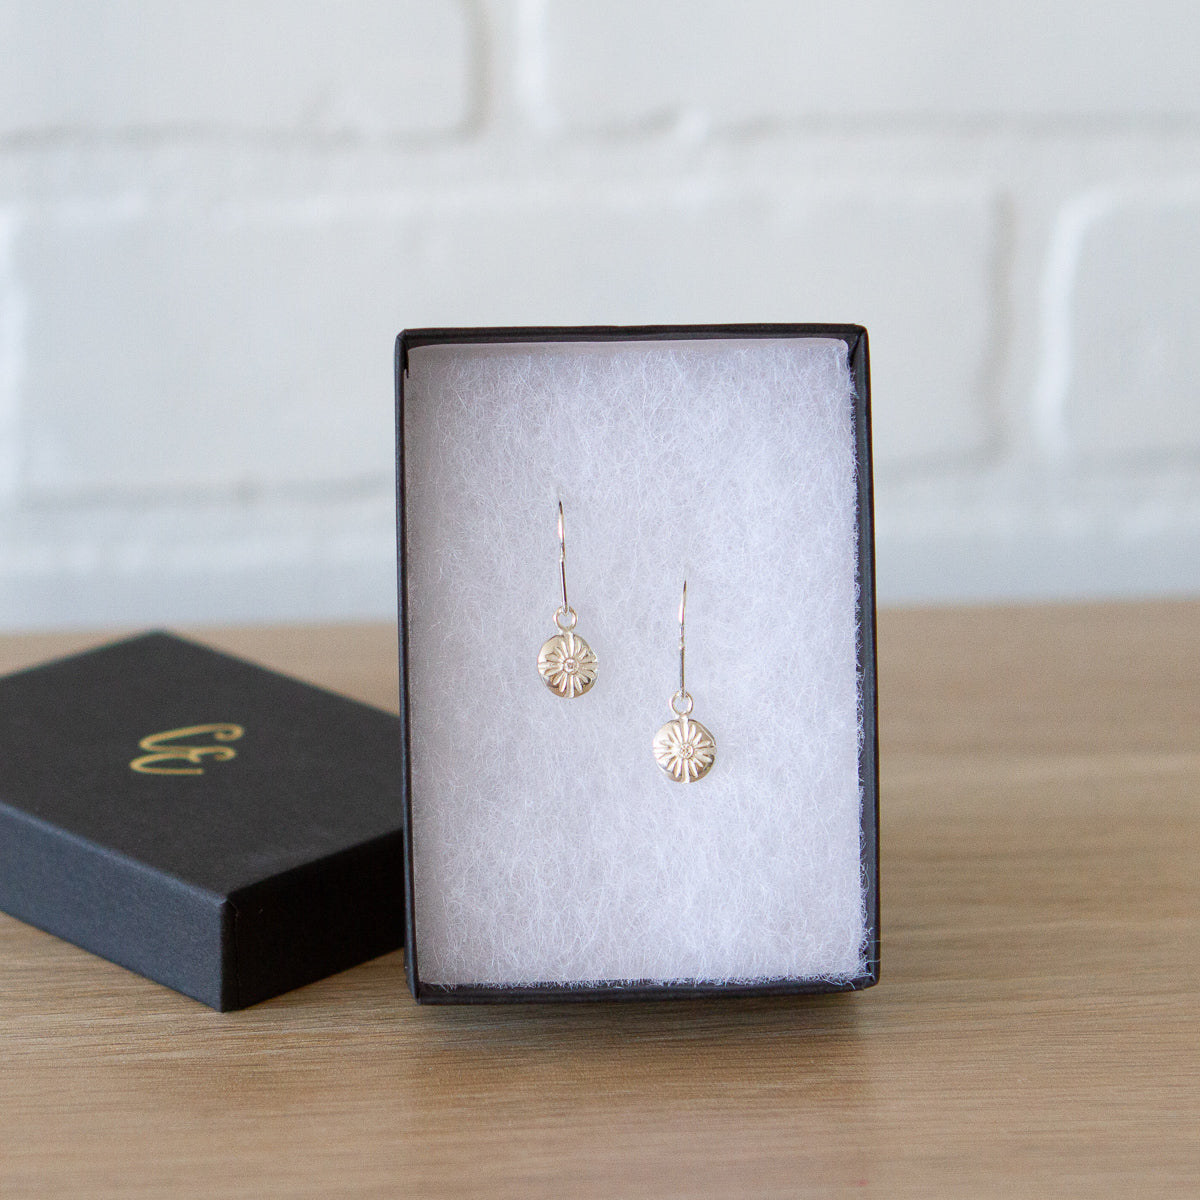 Lucia Small Dangle Earrings in Silver in a gift box | Corey Egan